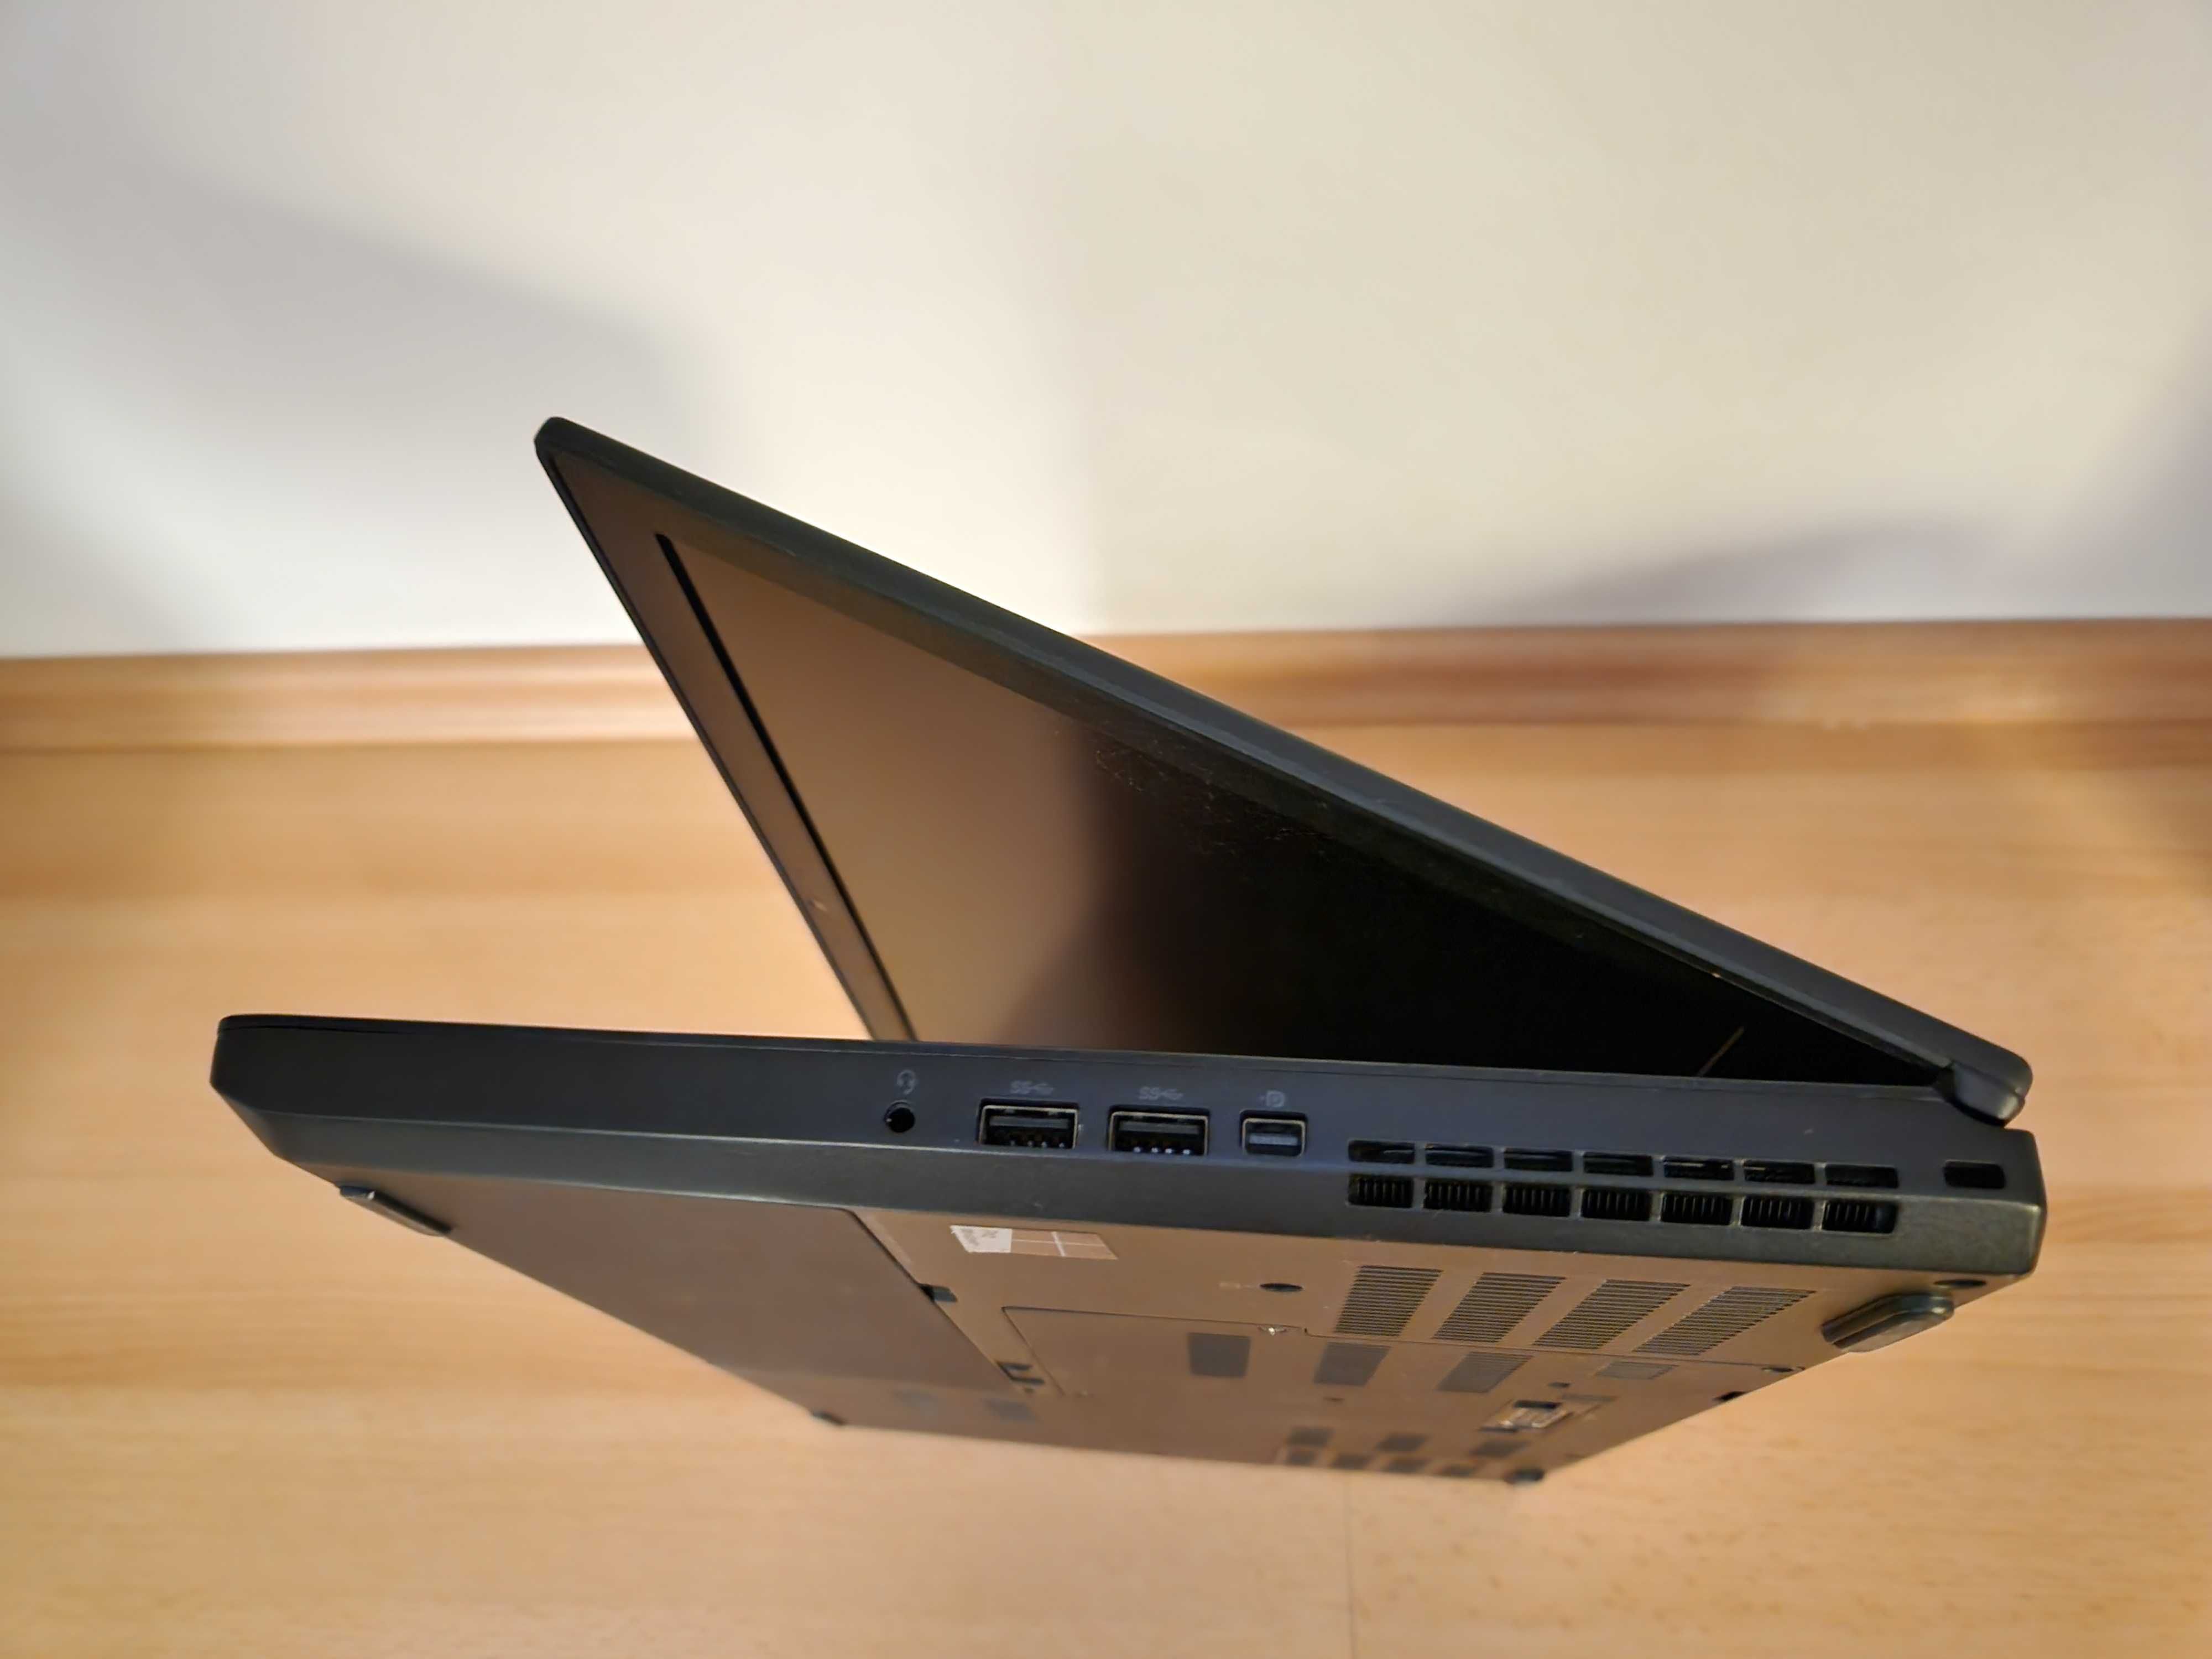 Mobilna stacja robocza Lenovo ThinkPad P50 (4K, XEON, Quadro M2000M)